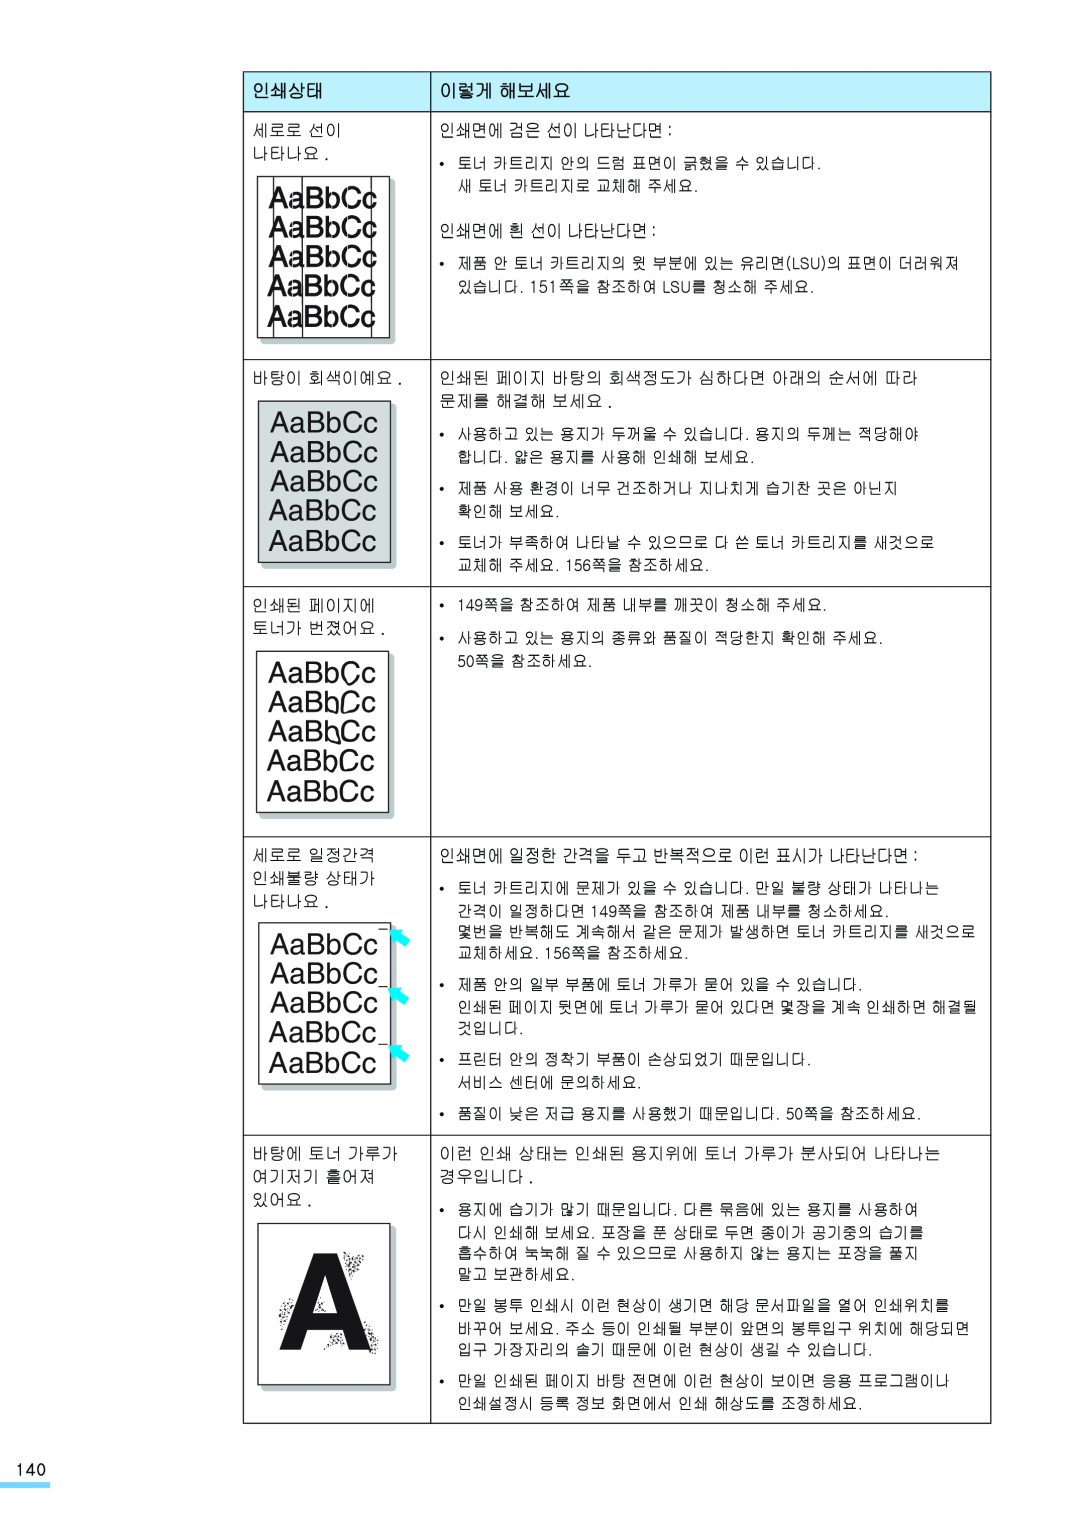 Samsung ML-2571N manual AaBbCc, 인쇄상태, 이렇게 해보세요, 인쇄면에 검은 선이 나타난다면, 인쇄면에 흰 선이 나타난다면, 인쇄면에 일정한 간격을 두고 반복적으로 이런 표시가 나타난다면 